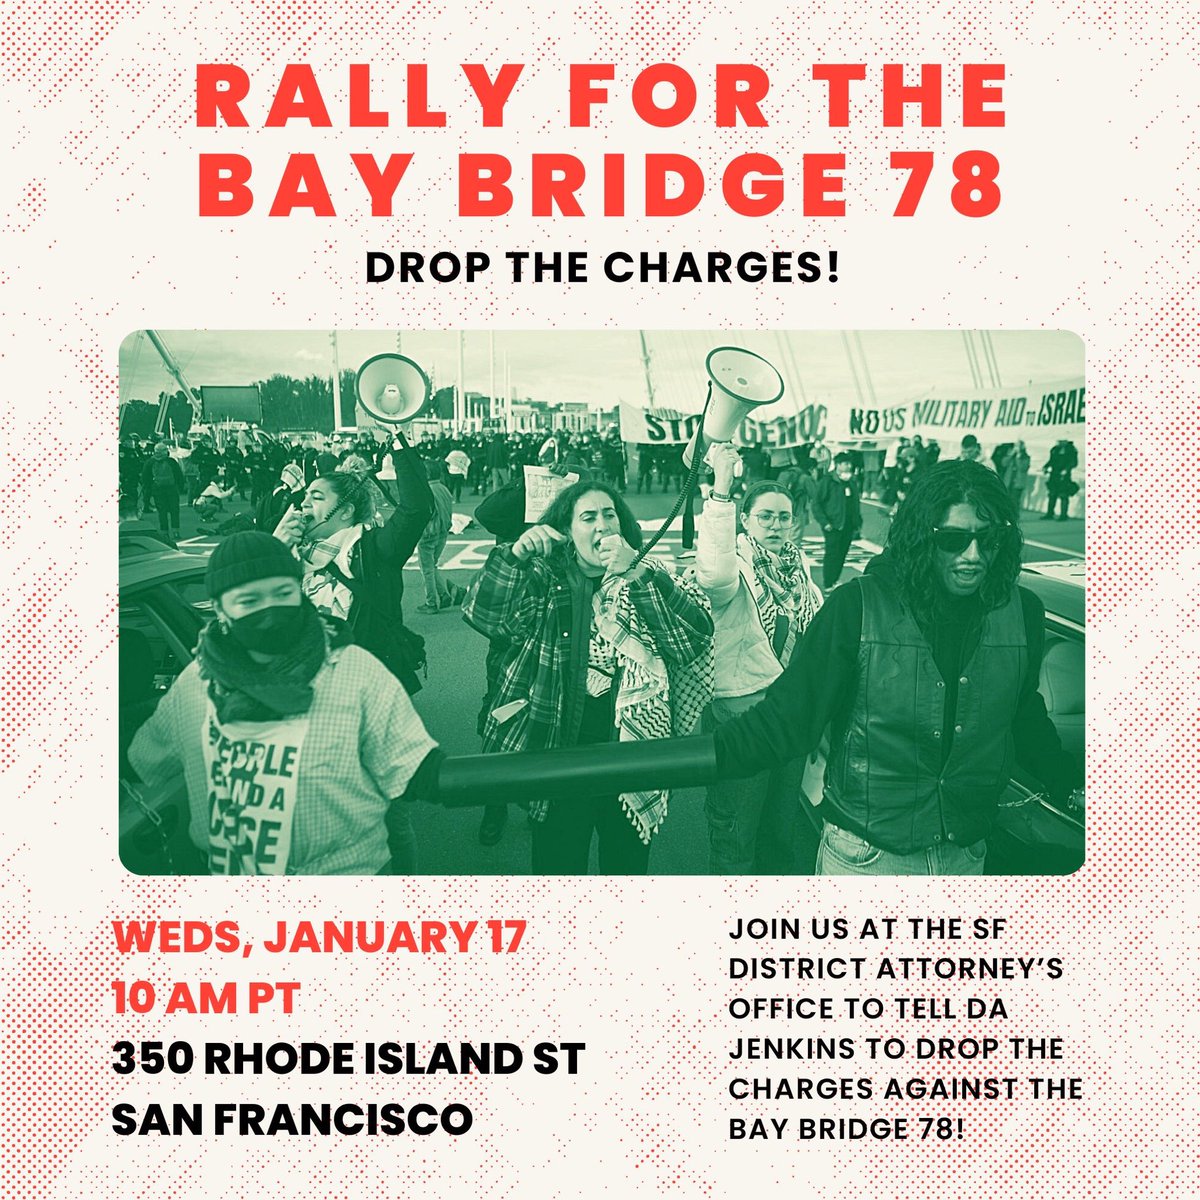 🏴🇵🇸 San Francisco comrades: Rally for the Bay Bridge 78 tomorrow, Wed 1/17 10a @ 350 Rhode Island St. Drop the charges, free Palestine! 🇵🇸🏴

#SanFrancisco #baybridge78 #palestine #gaza #GazaHolocaust #GazaCeasefire #CeasefireNOW #StopGazaGenocideNOW #antifascist #freepalestine